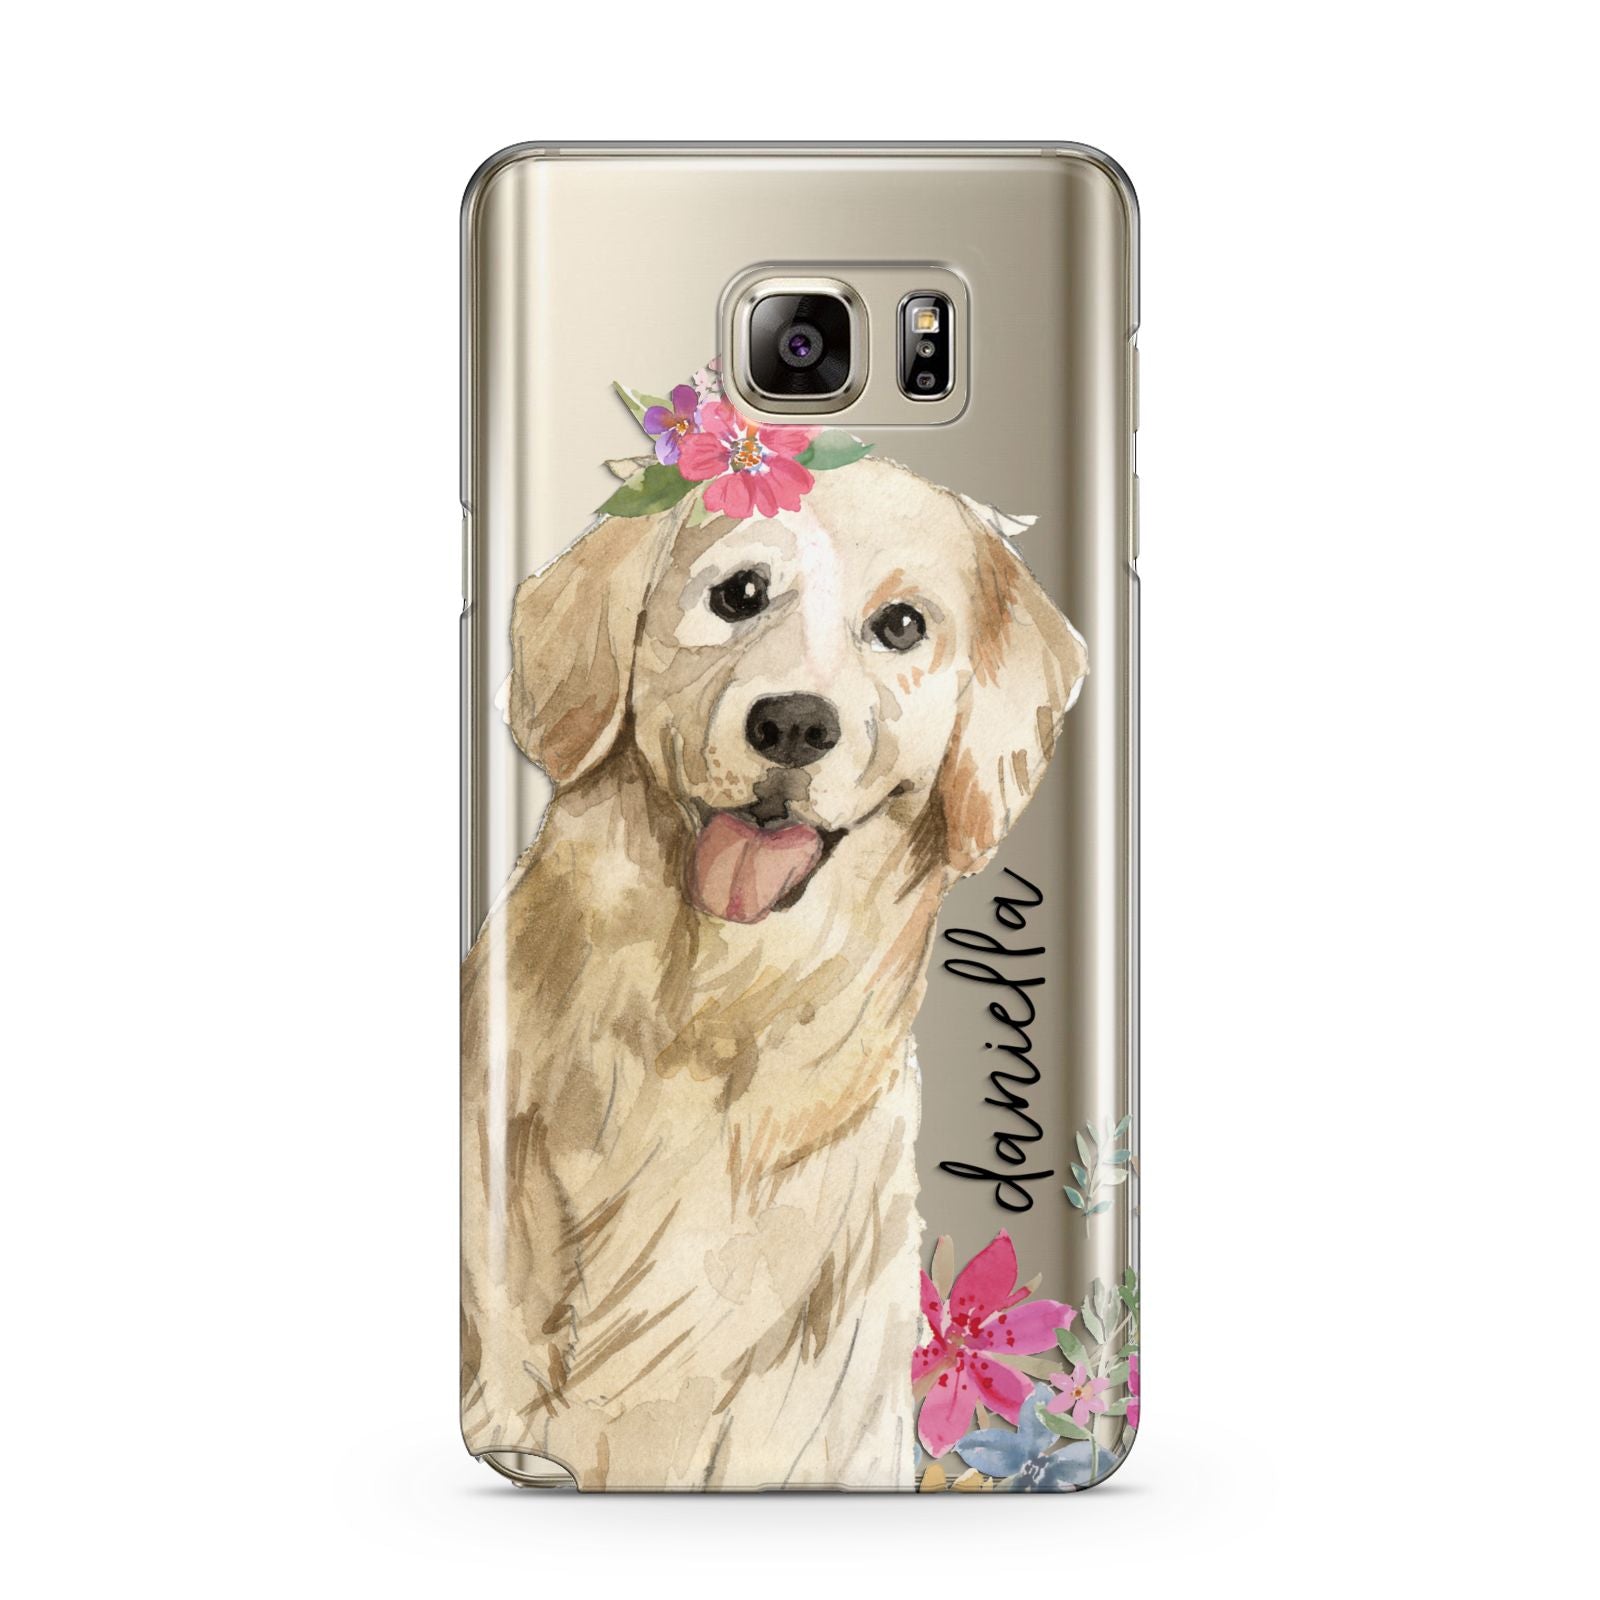 Personalised Golden Retriever Dog Samsung Galaxy Note 5 Case